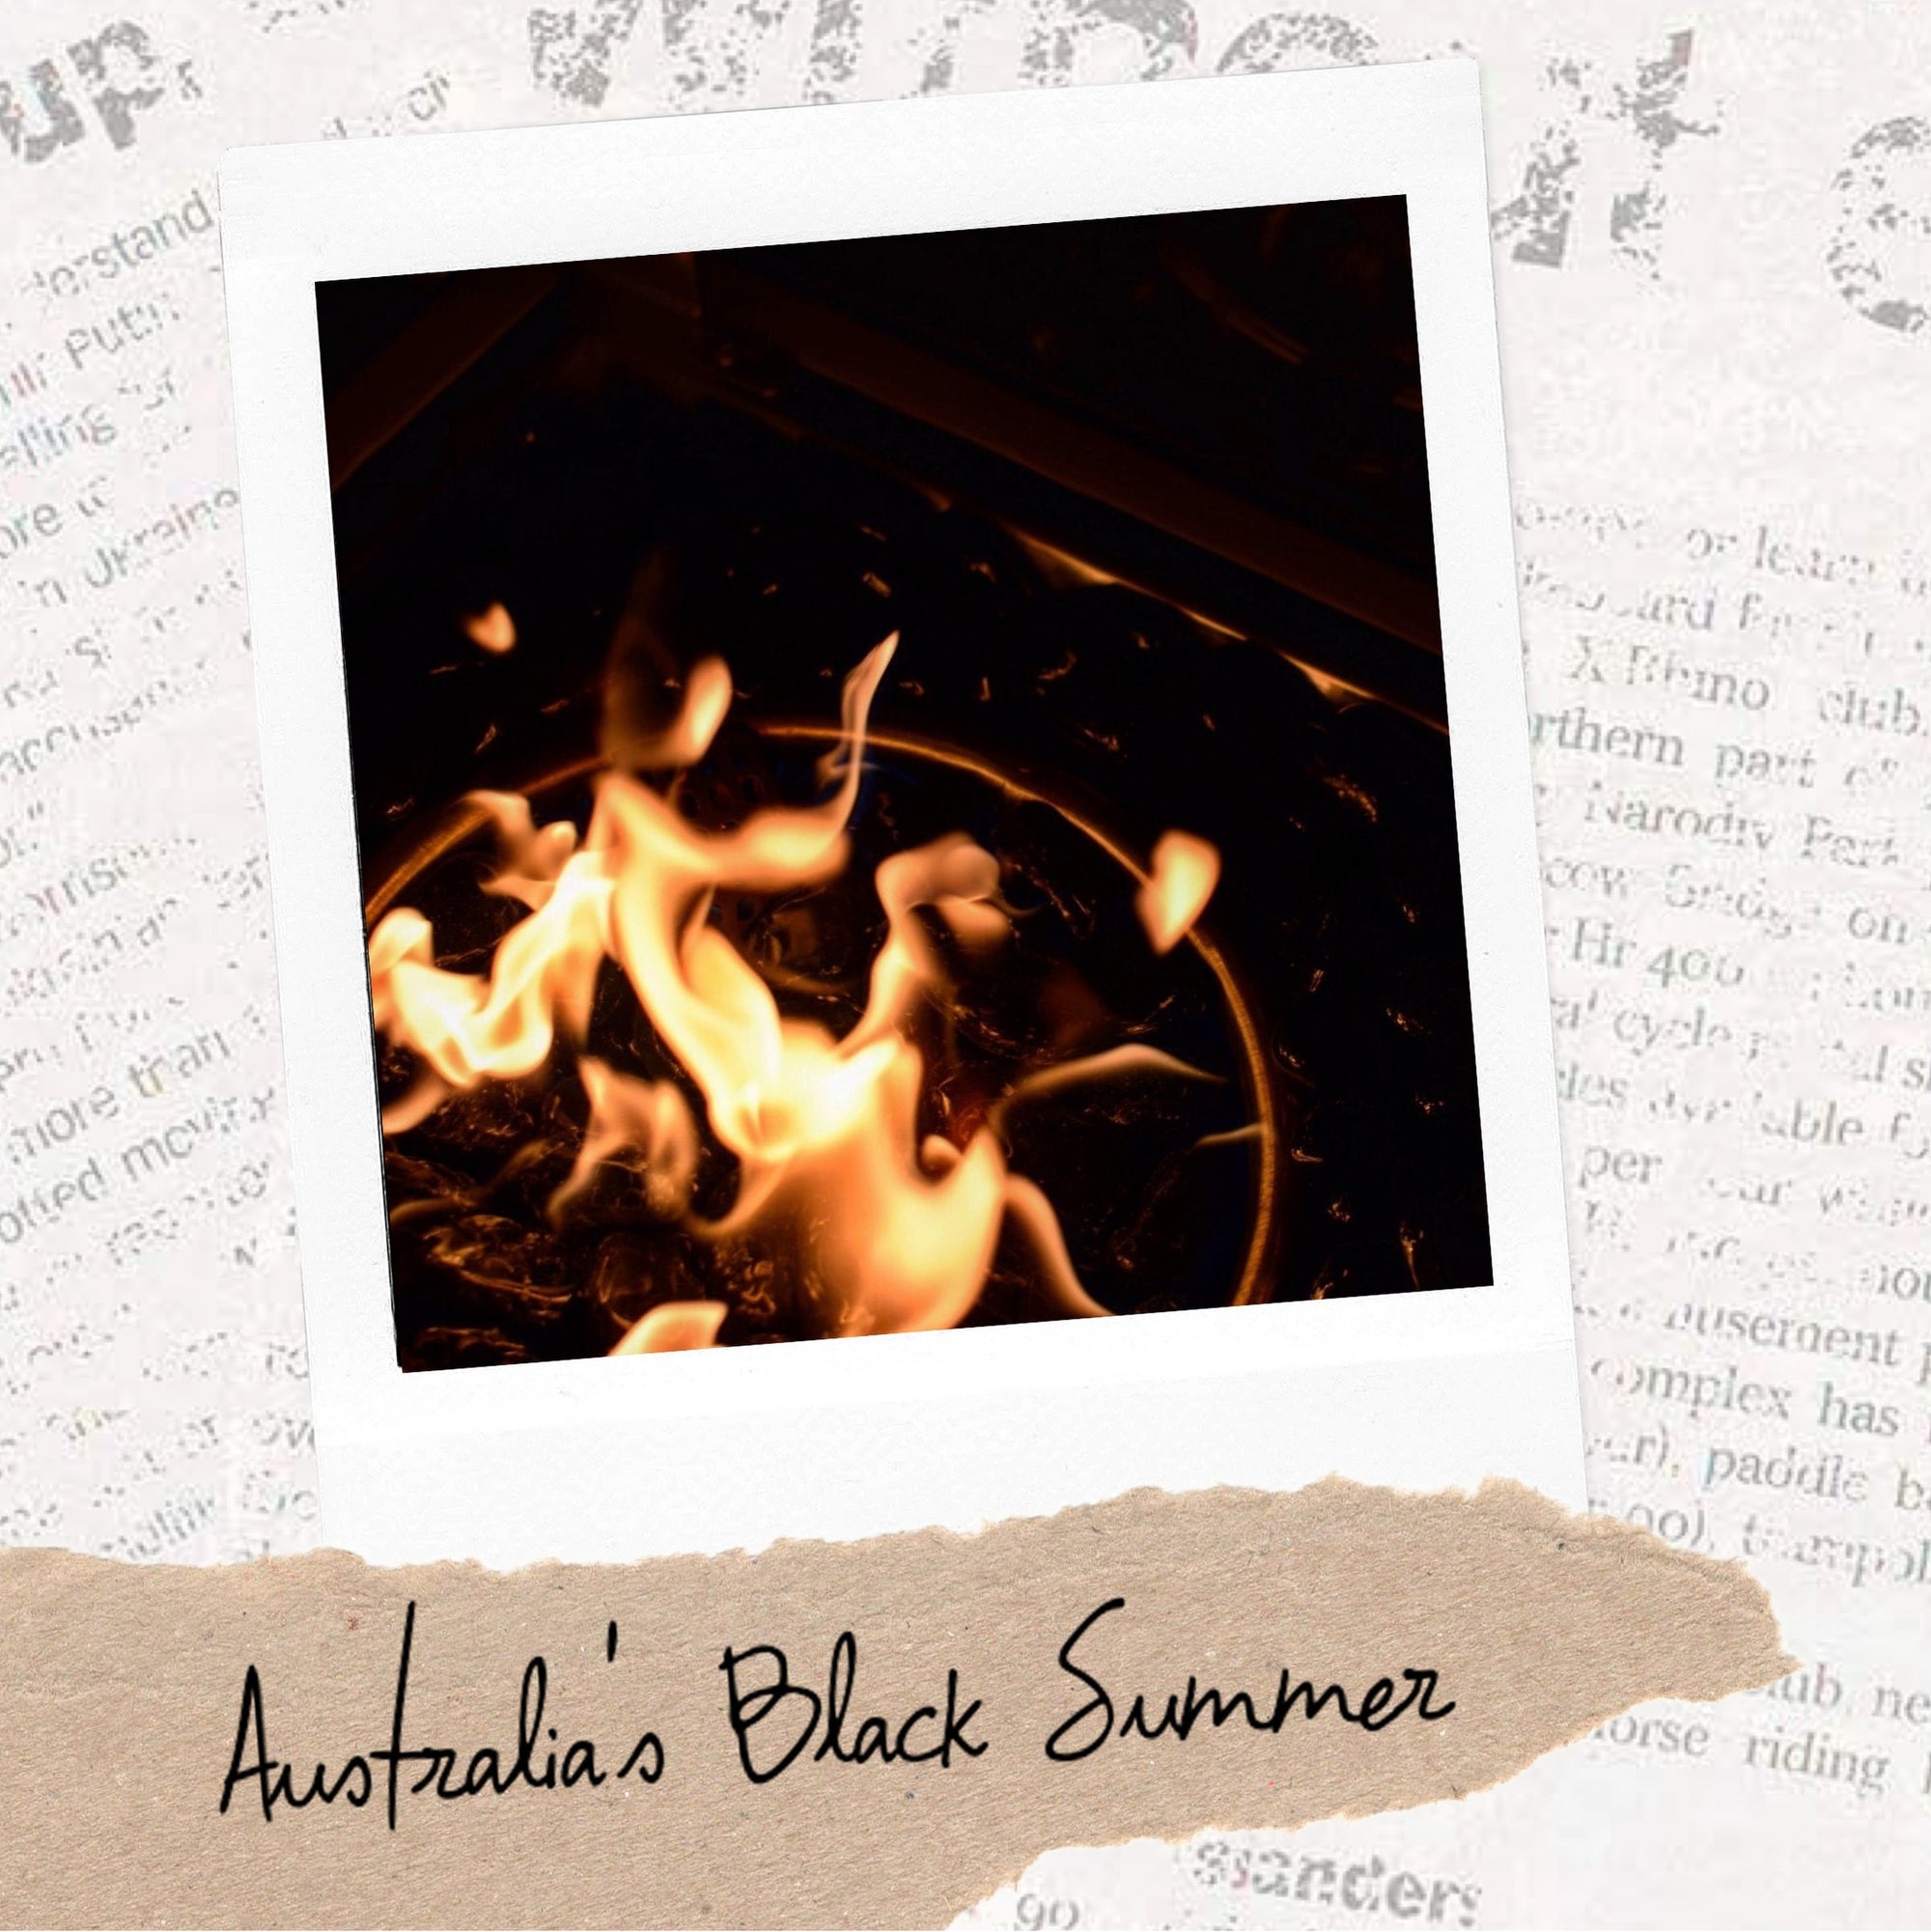 Australia's Black Summer